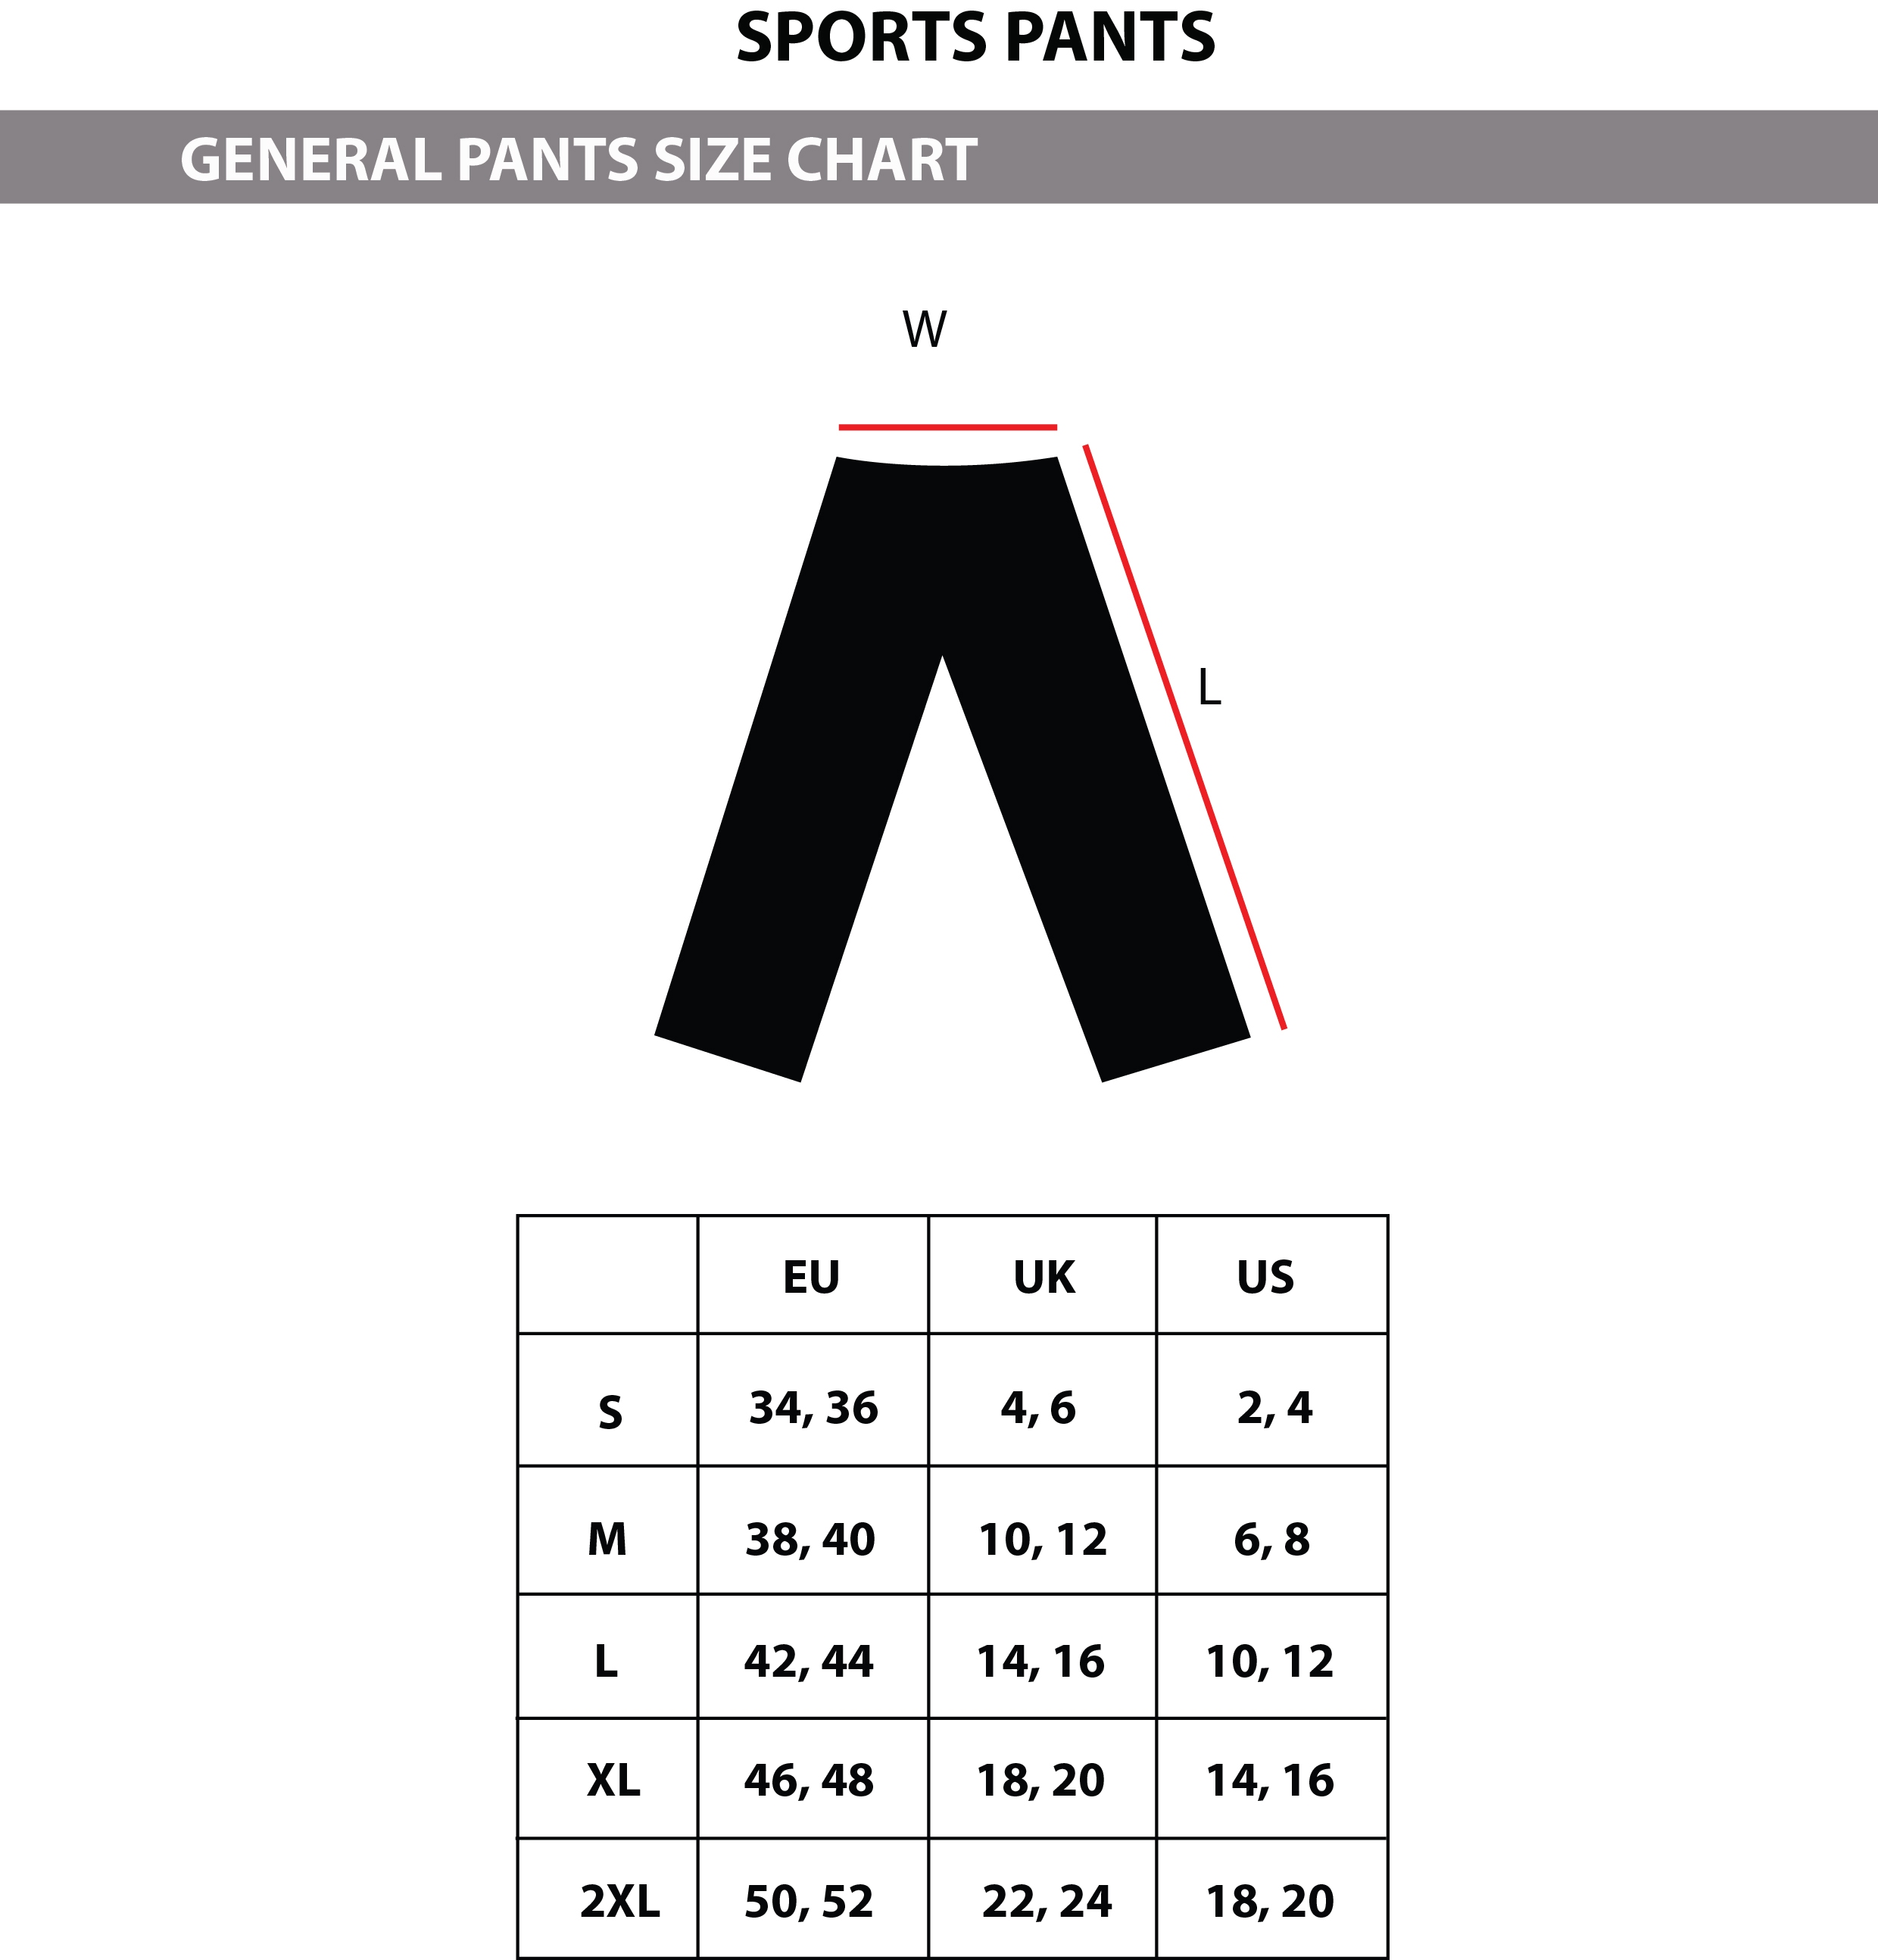 Leggings Size Chart